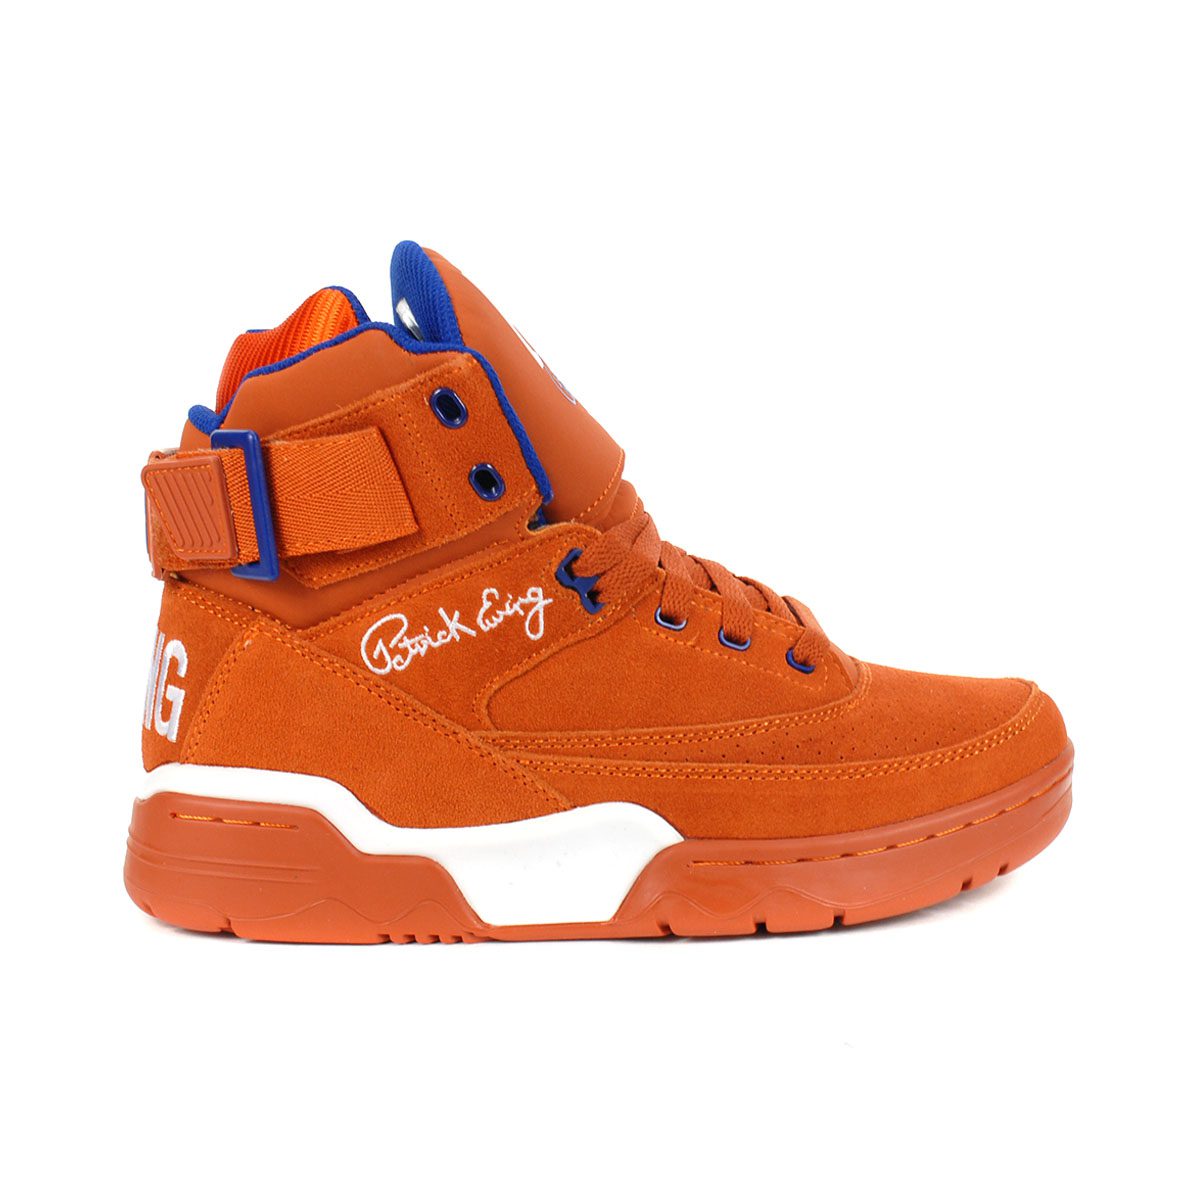 Patrick Ewing 33 HI Orange/Royal/White Basketball Shoes